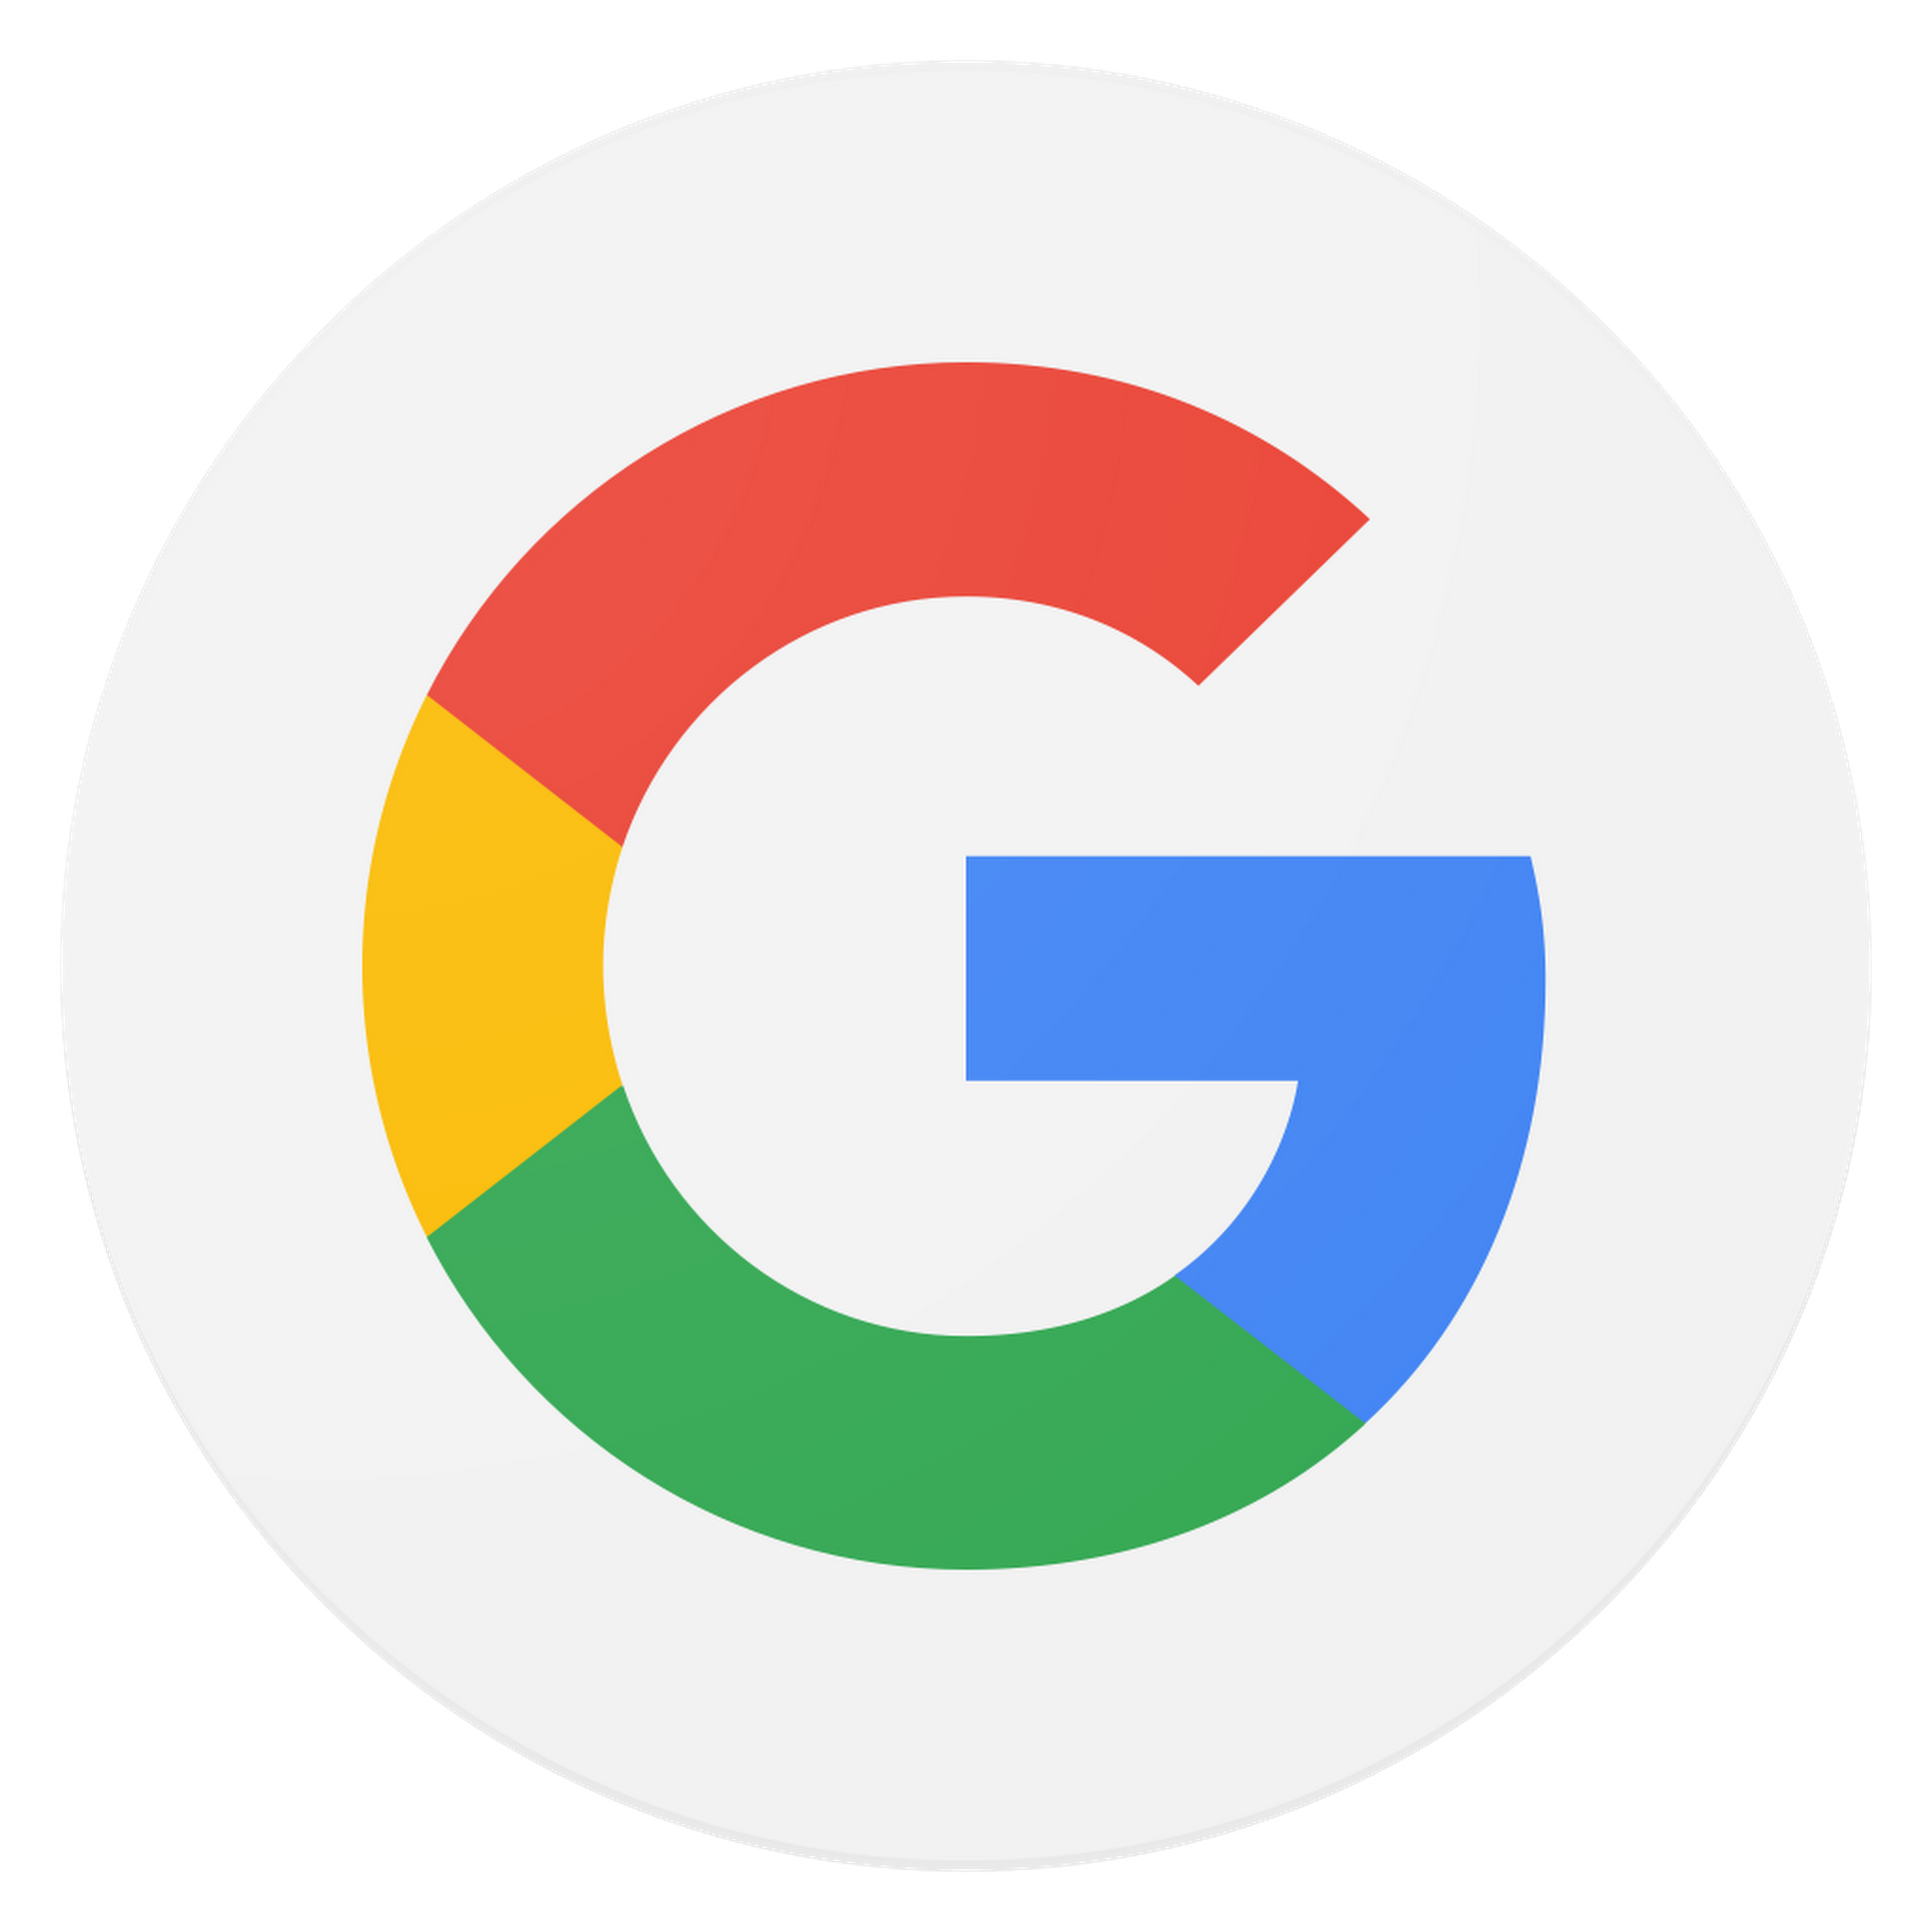 Small Google logo